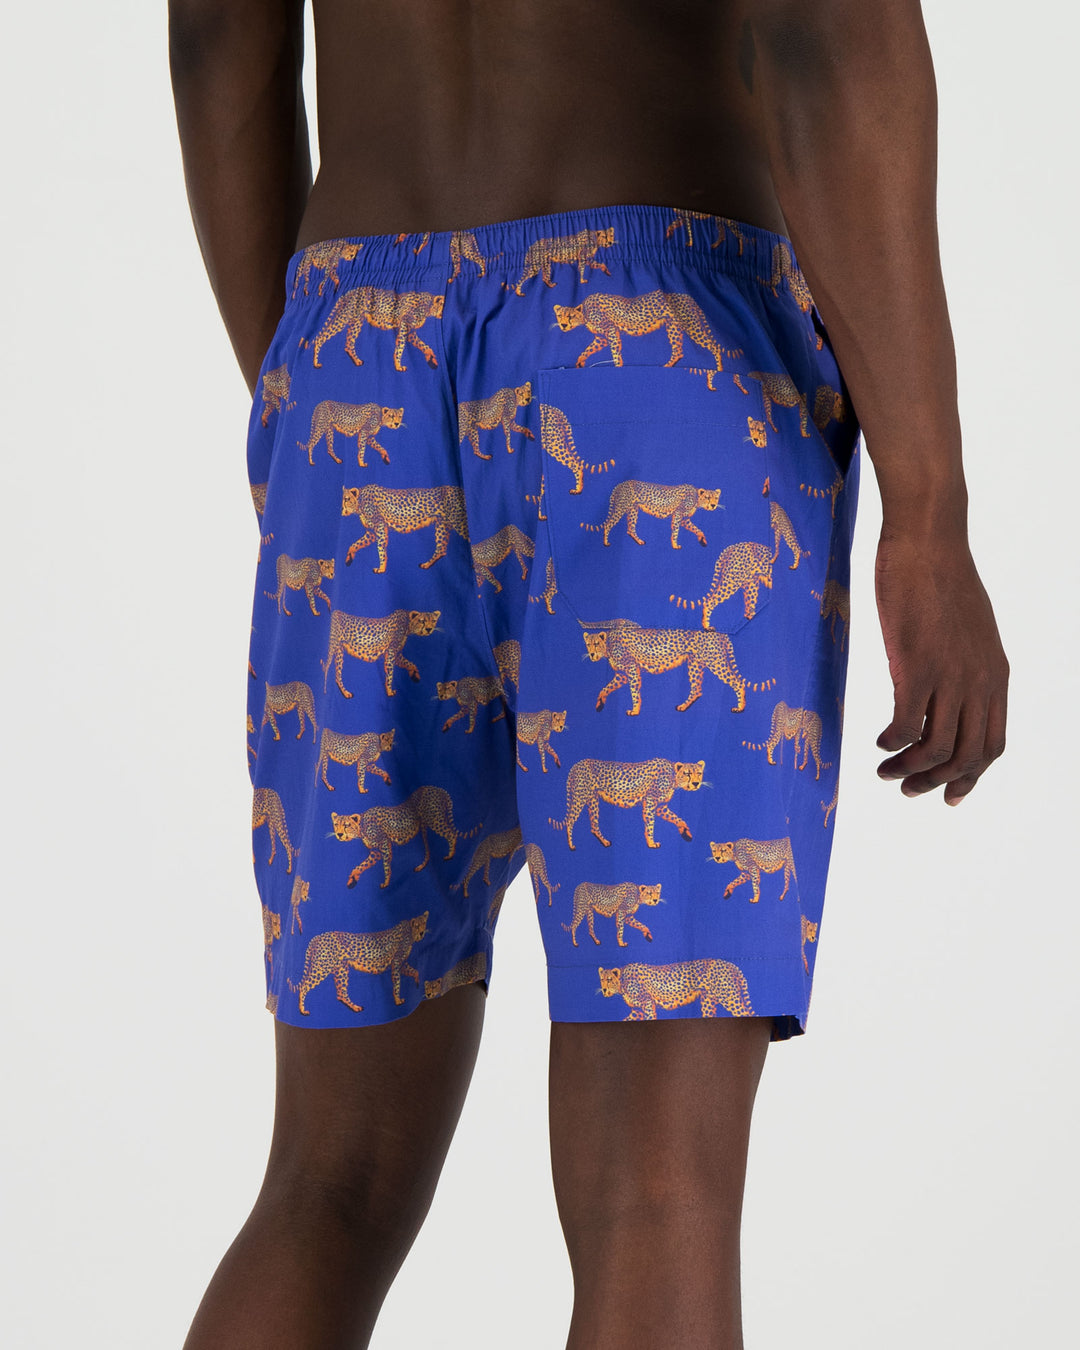 Mens Lounge Shorts - Blue Cheetahs